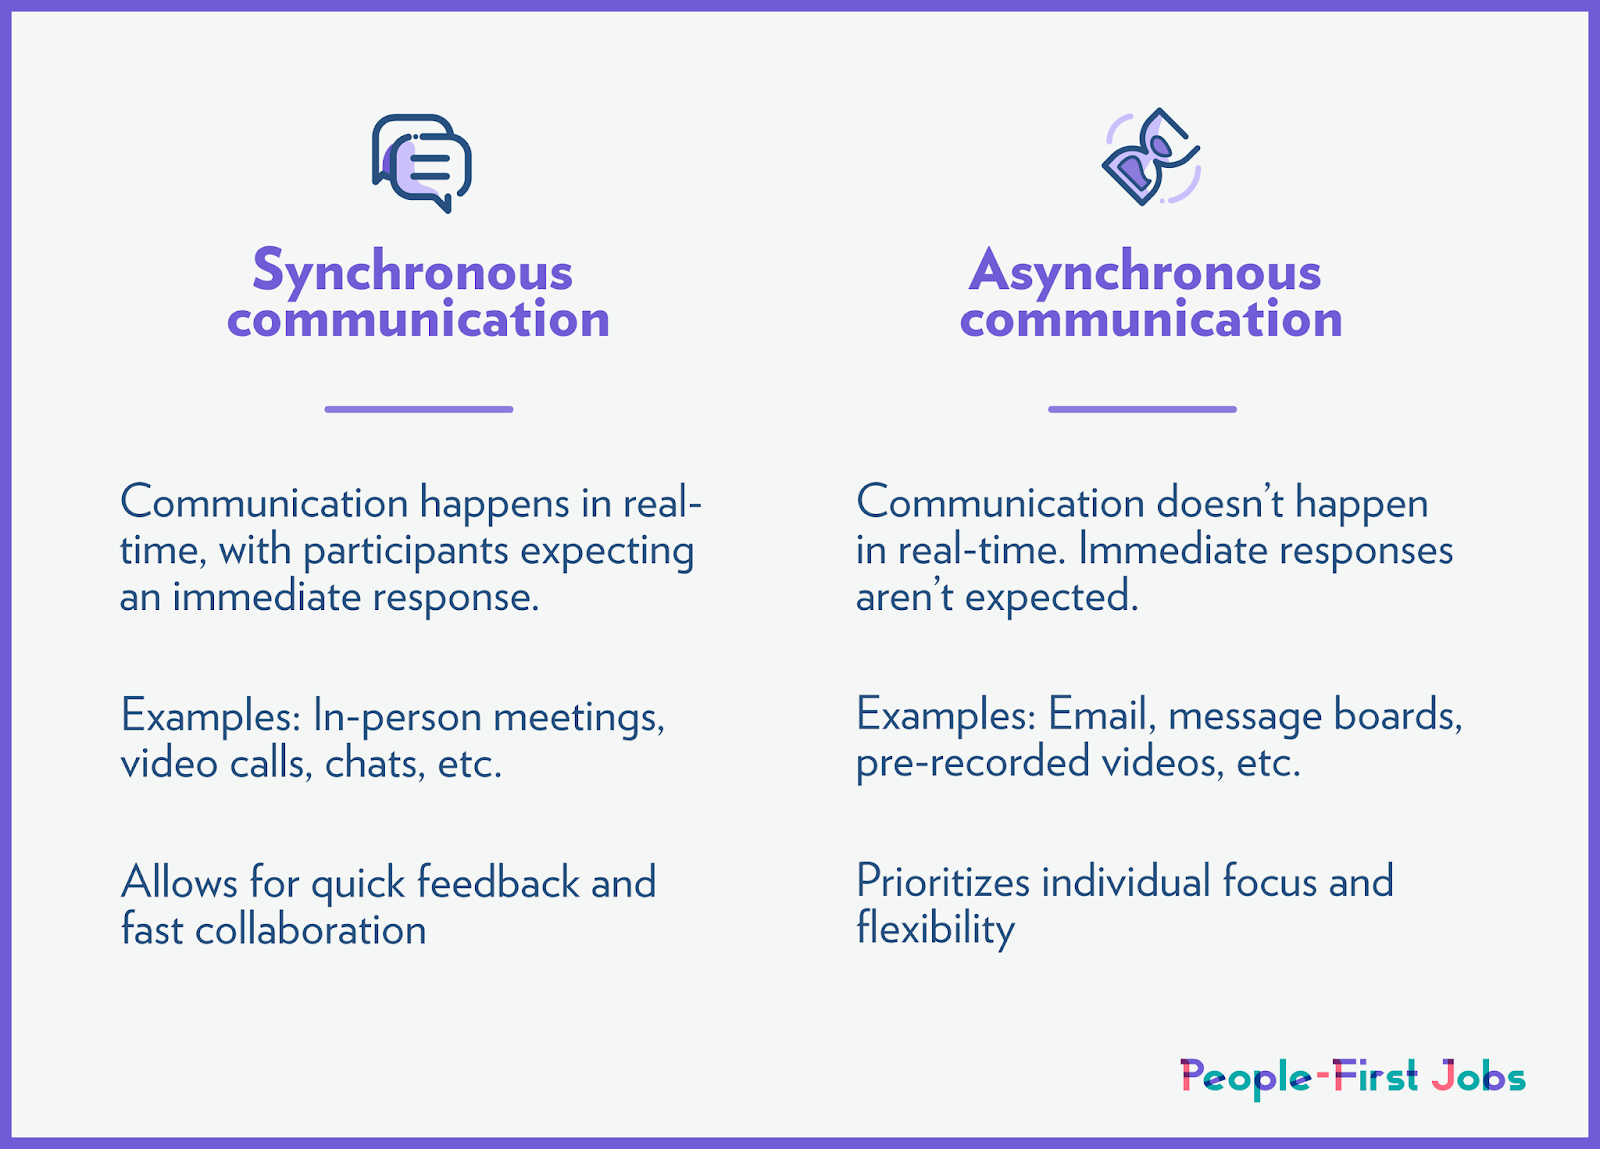 Synchronous vs asynchronous communication